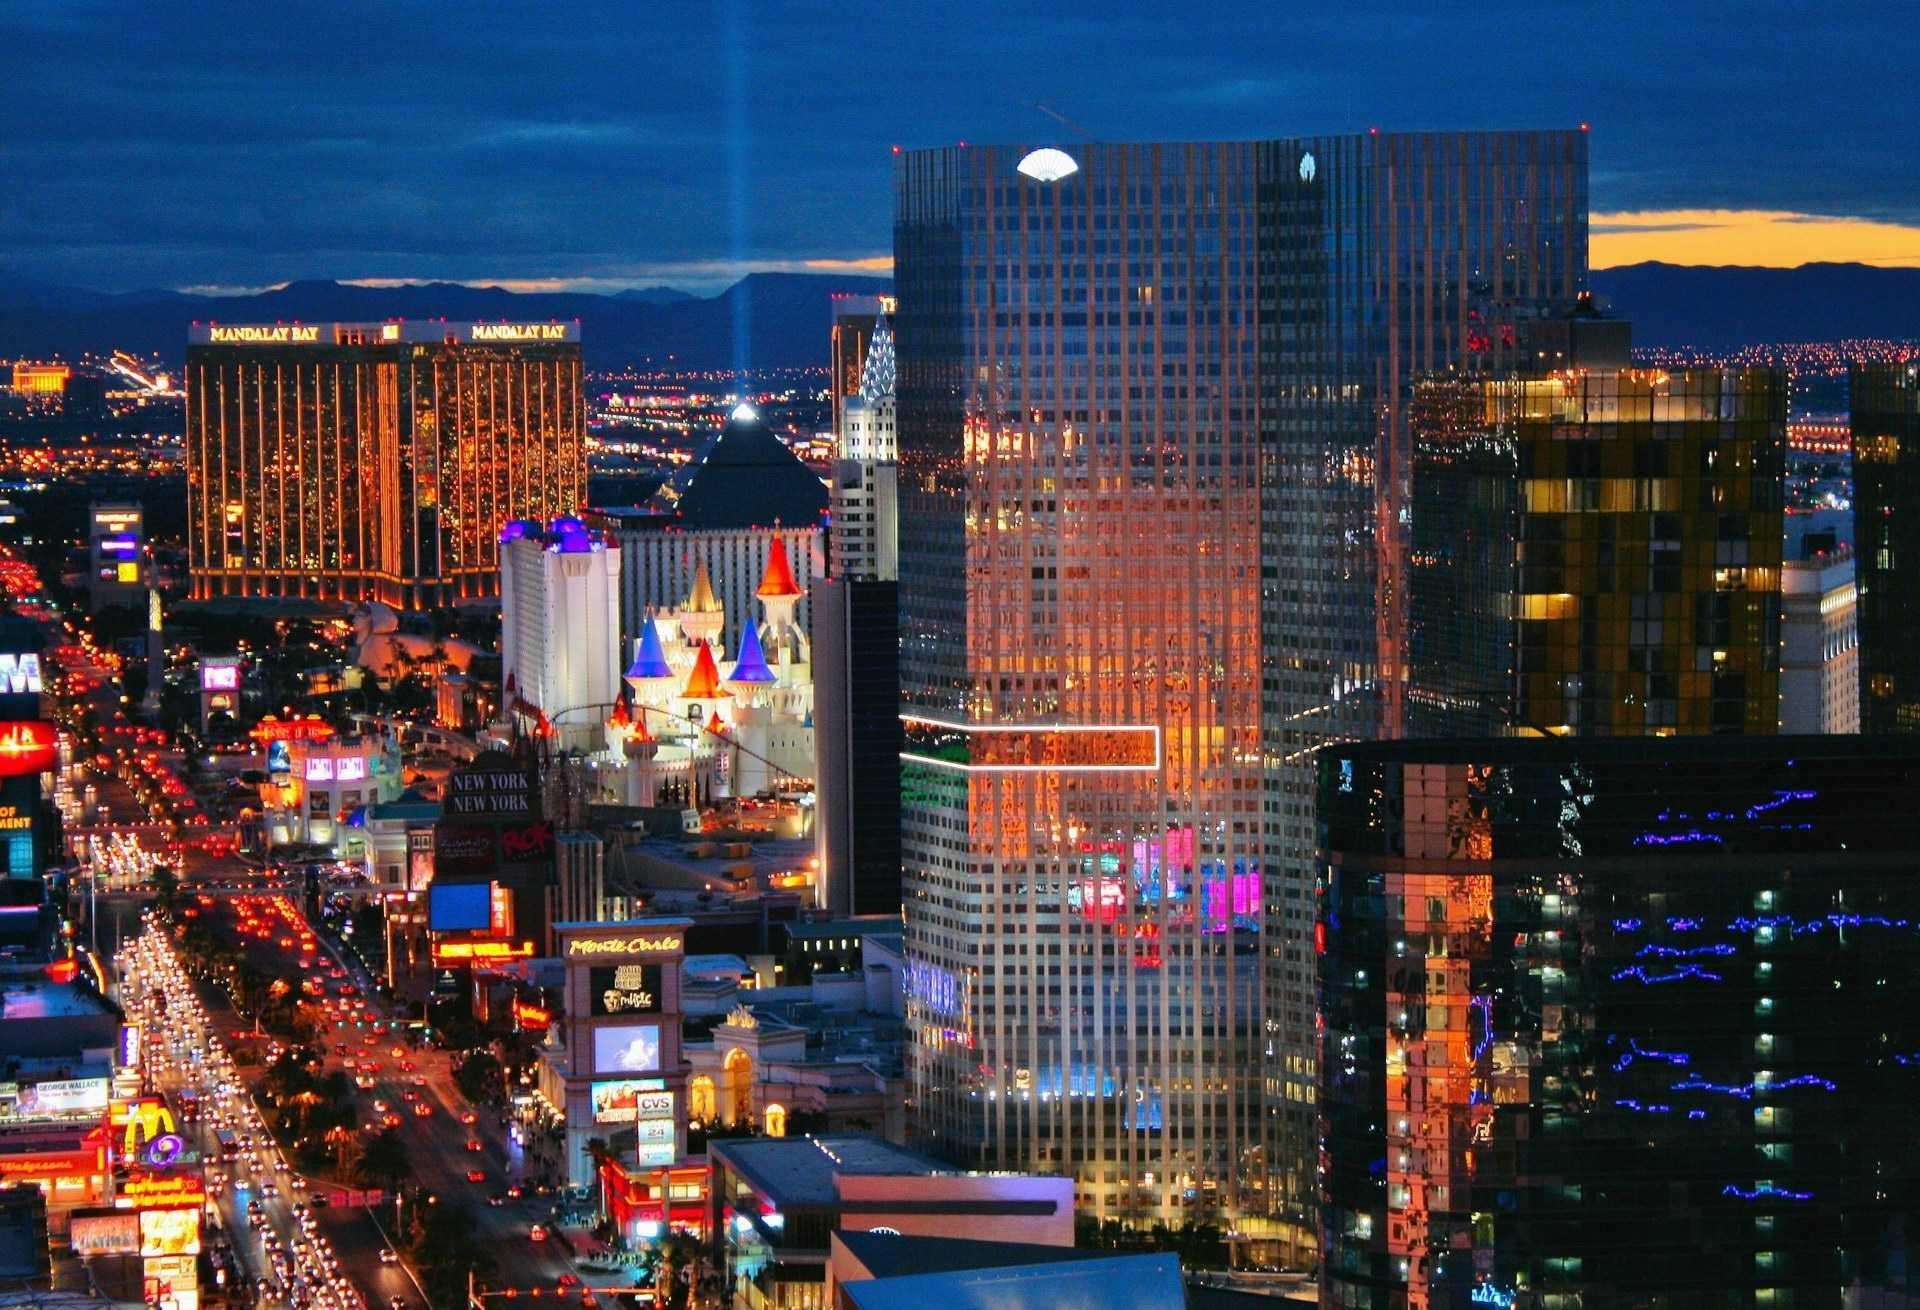 Las Vegas Wallpapers HD